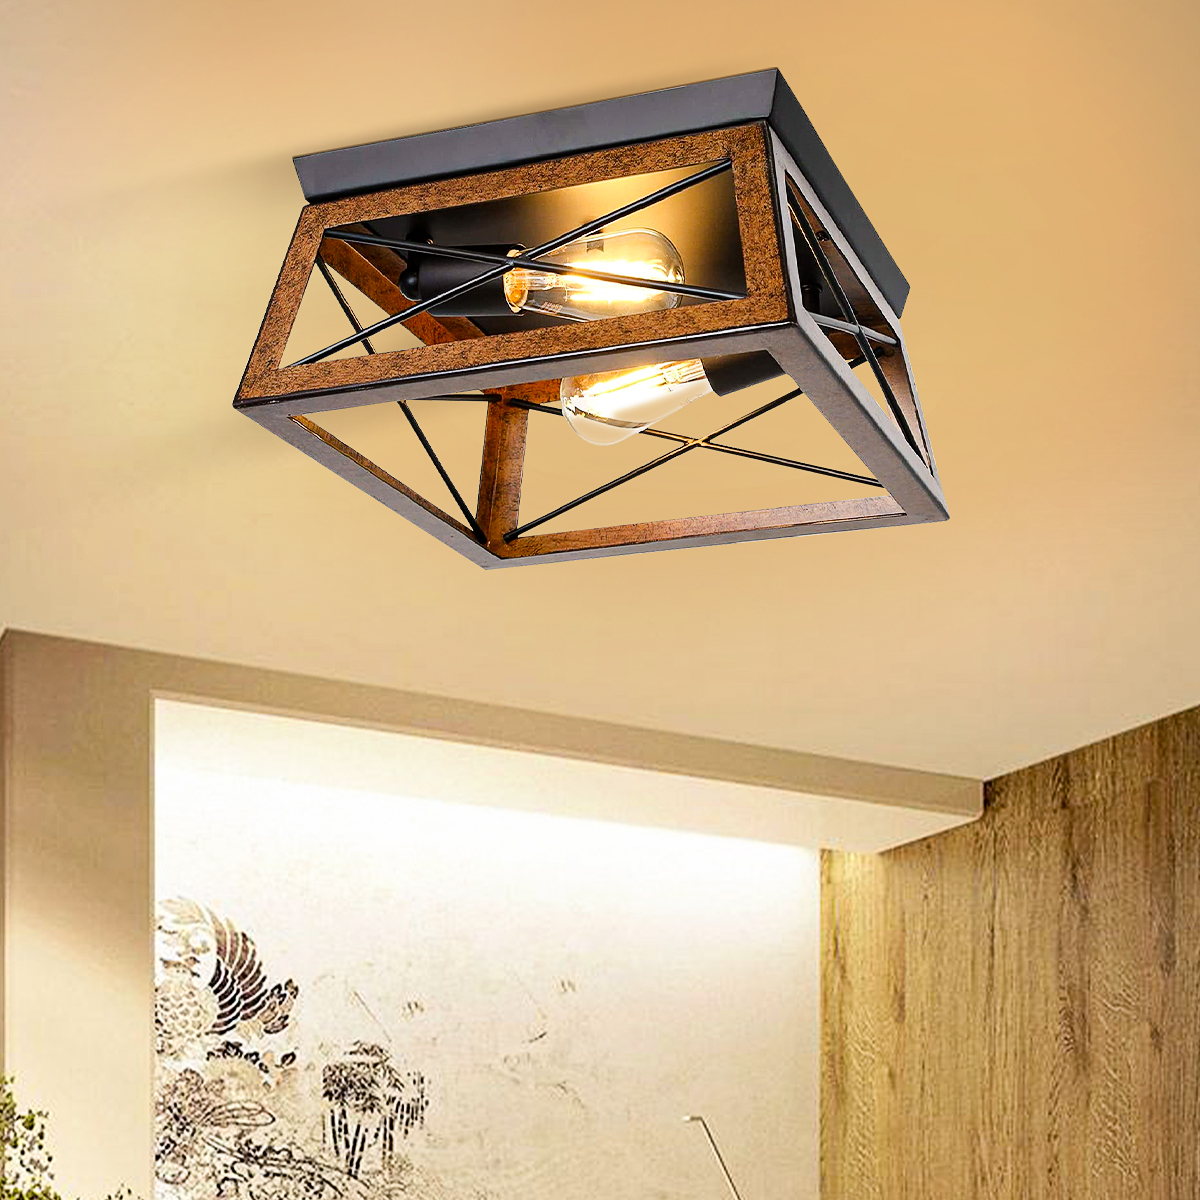 Ceiling-Light-Fixtures-Adjustable-Wall-Mounted-Lamp-Holder-Bedroom-Living-Room-1841319-4